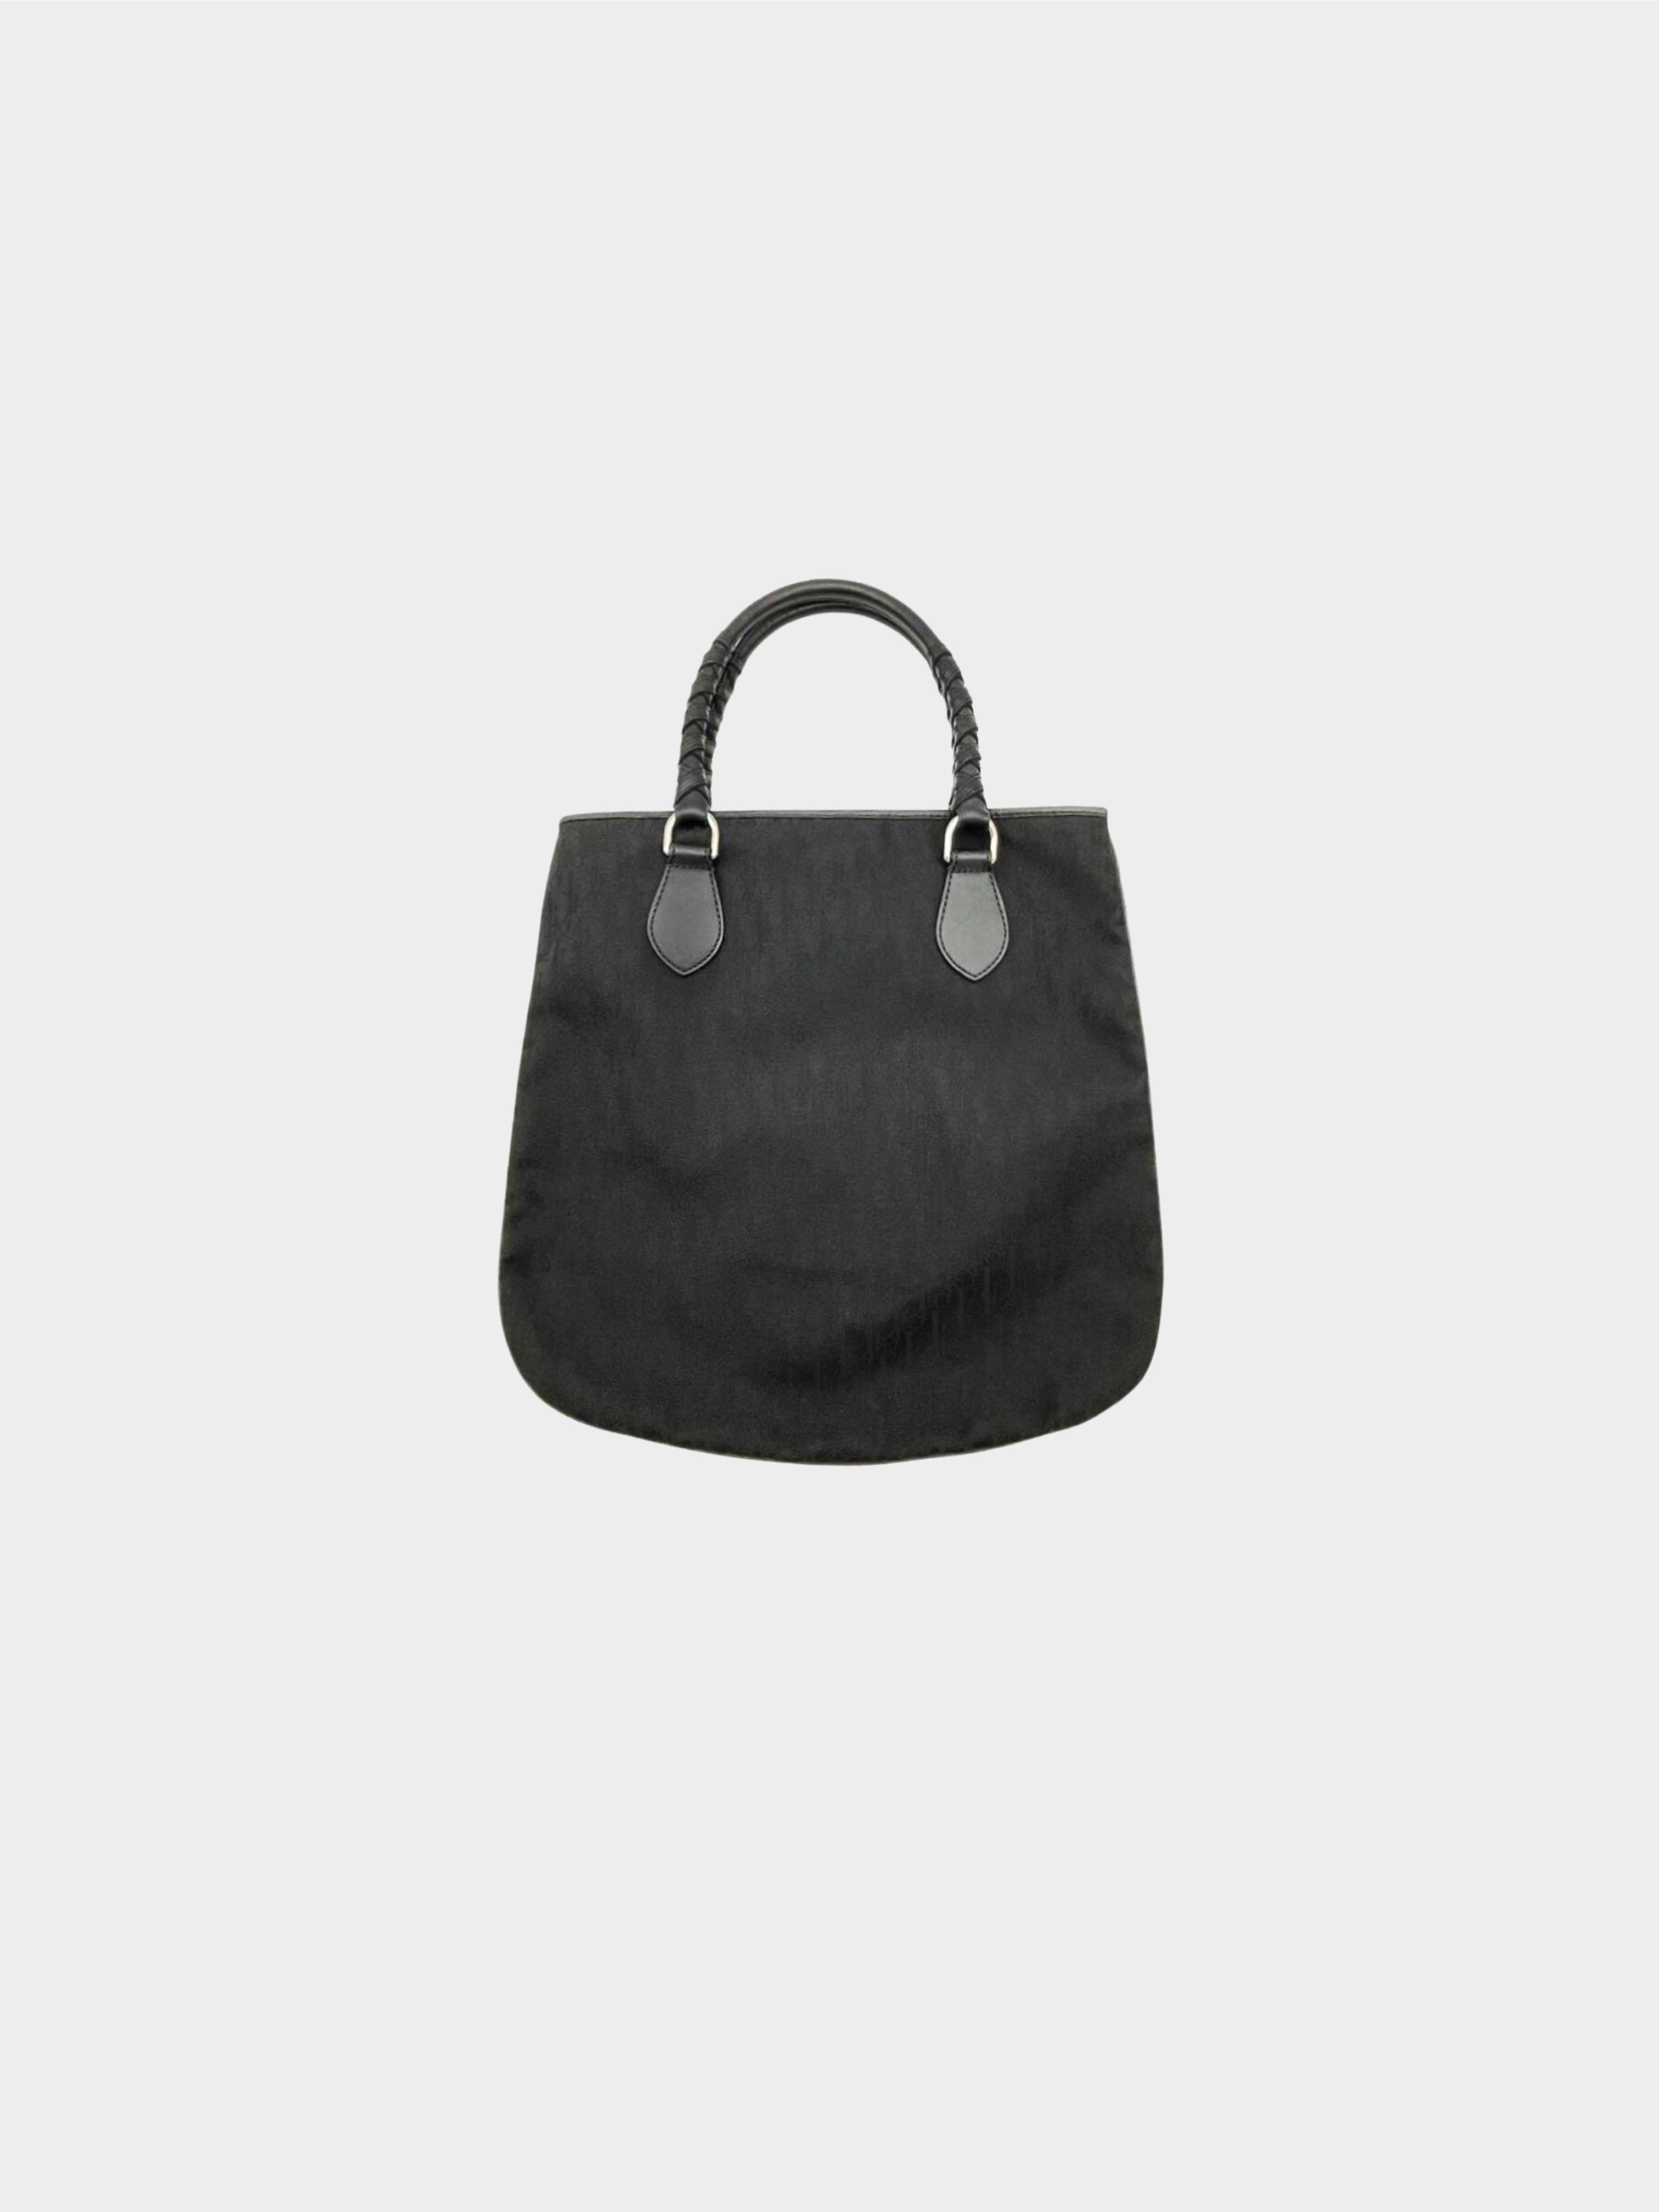 Christian Dior 2007 Black Trotter Tote Bag